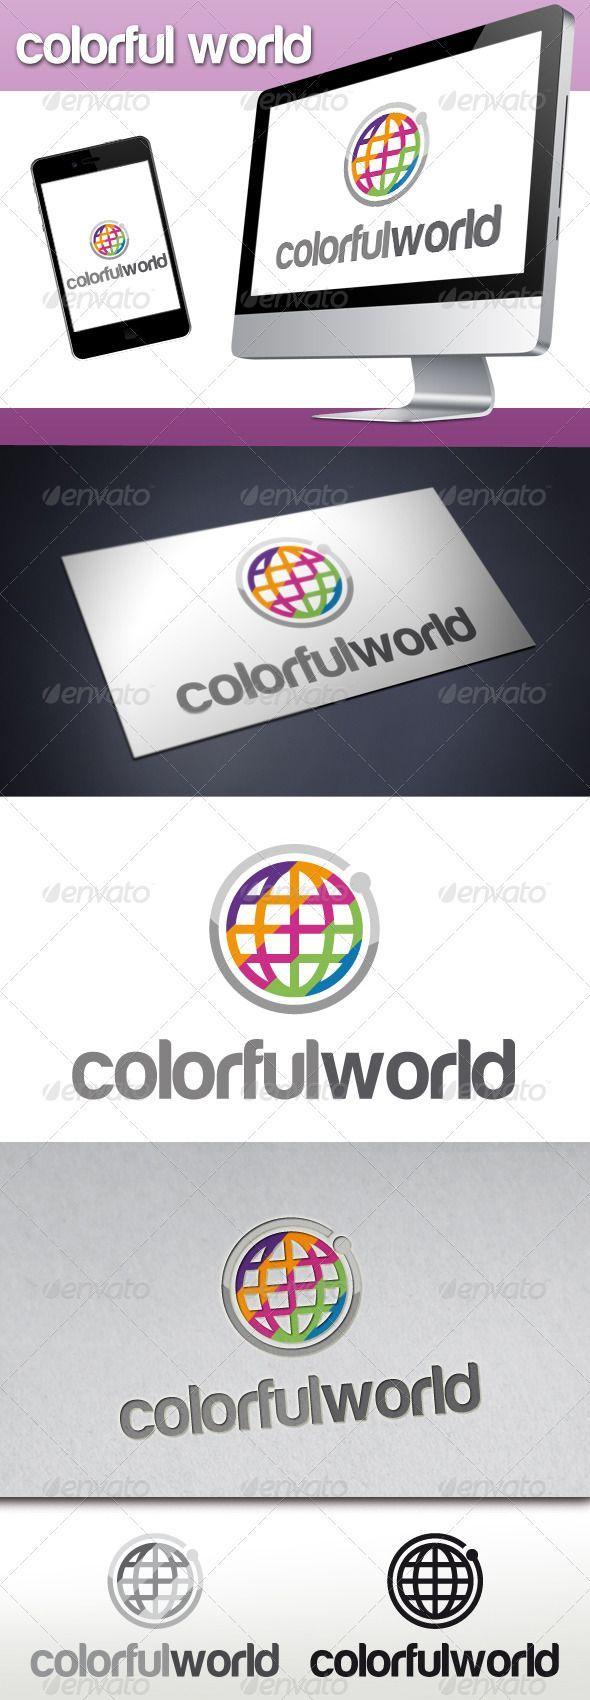 Colorful World Logo - Colorful World Logo #GraphicRiver color version: color